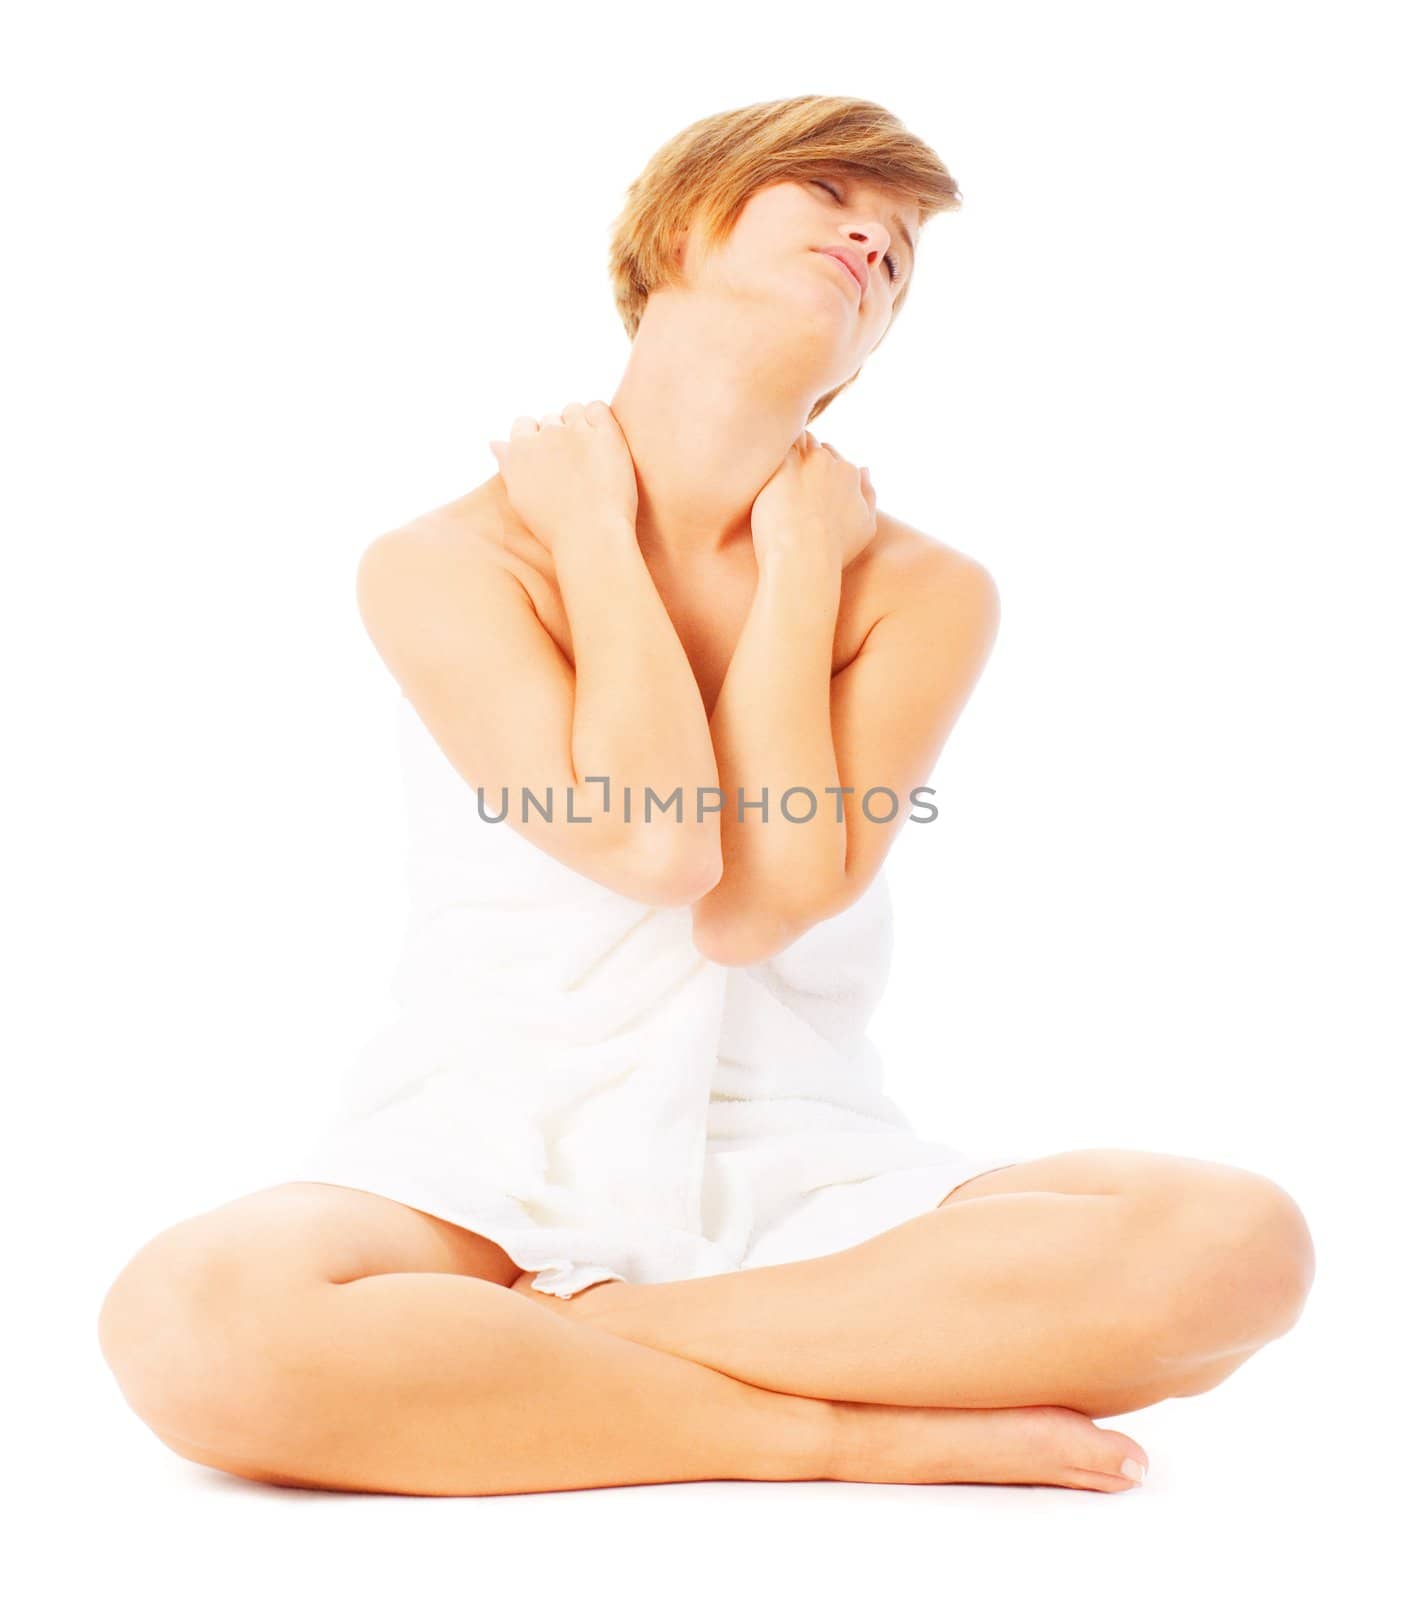 Woman in Towel Massaing Herself by cardmaverick